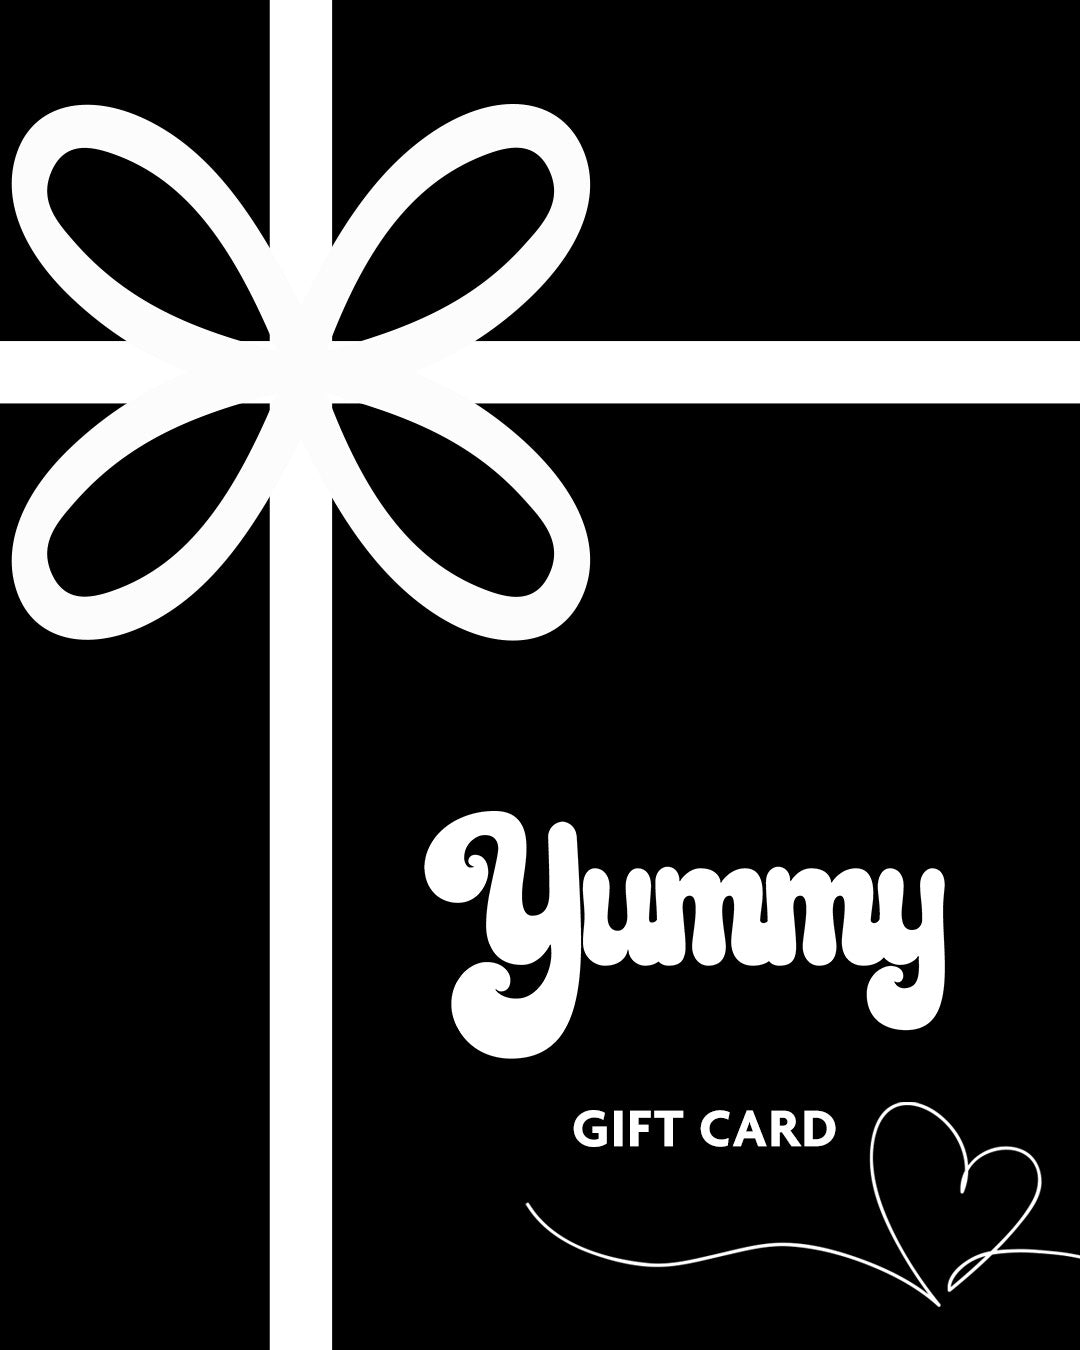 Yummy Gift card (8167909556474)